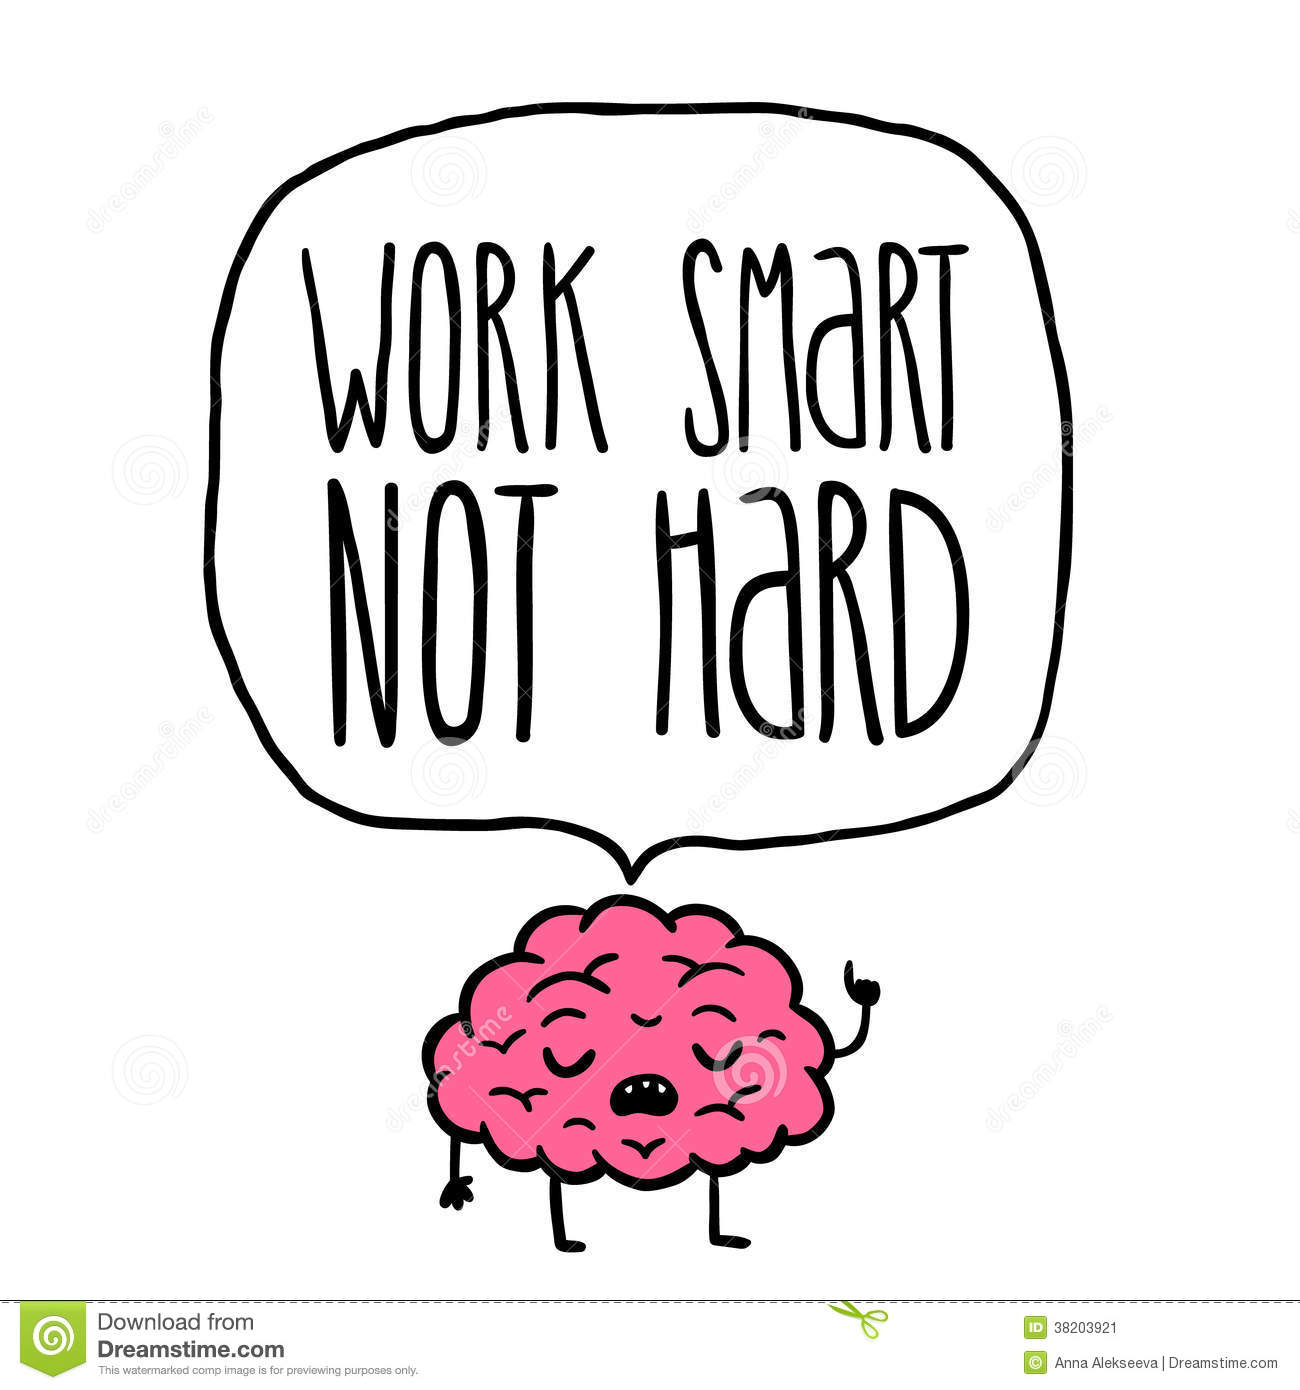 Work Smart Not Hard Illustration Stock Image   Image  38203921